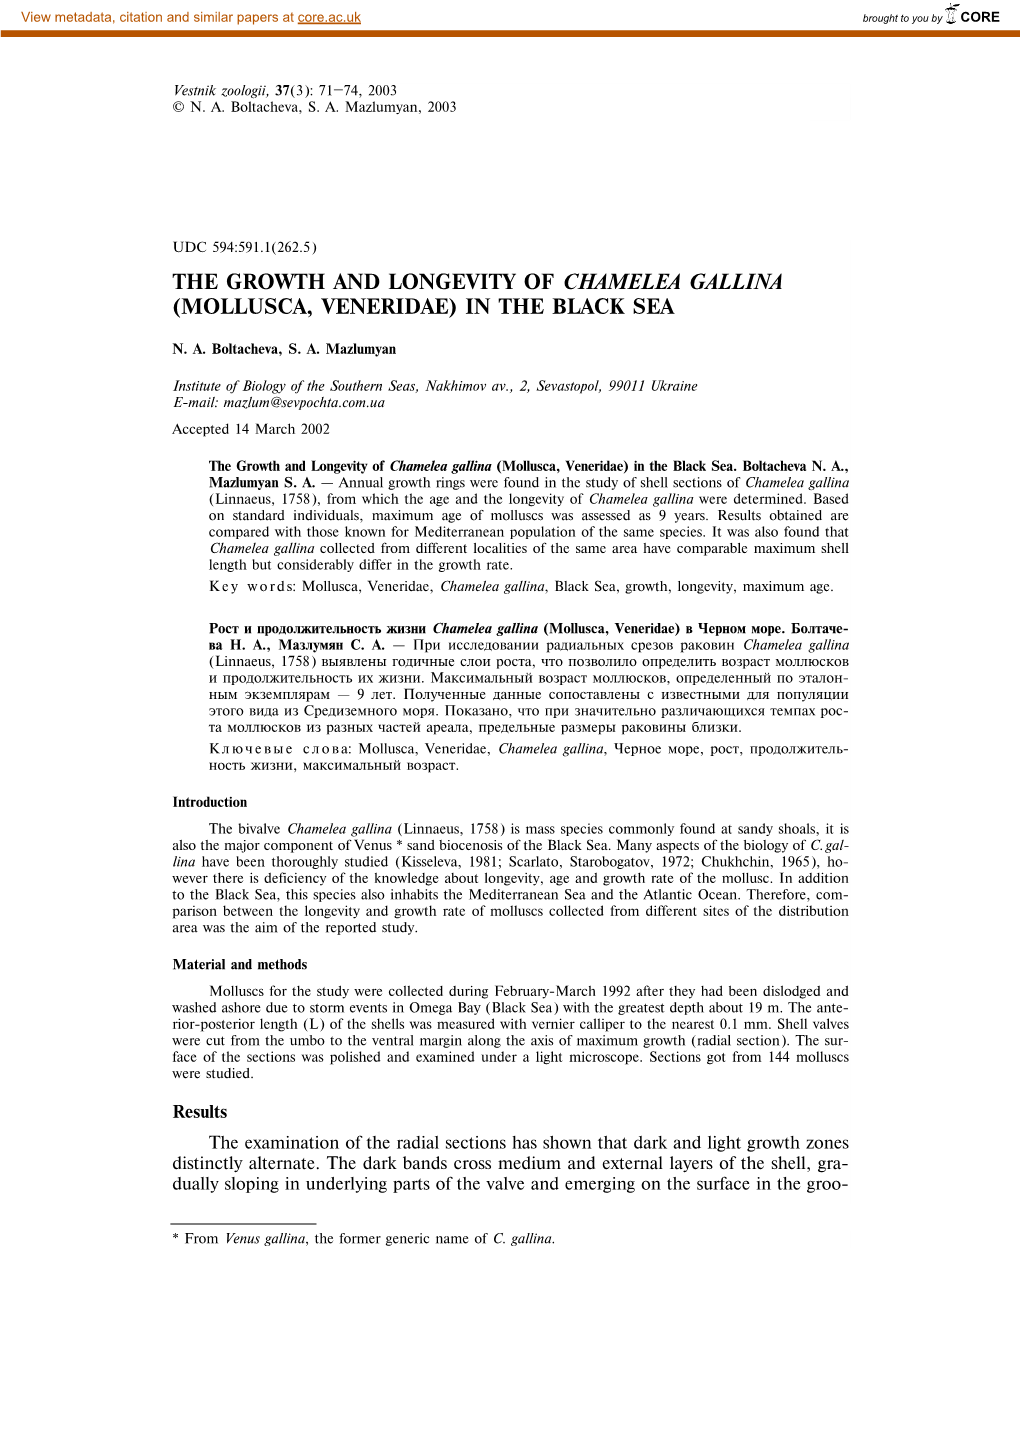 The Growth and Longevity of Chamelea Gallina (Mollusca, Veneridae) in the Black Sea